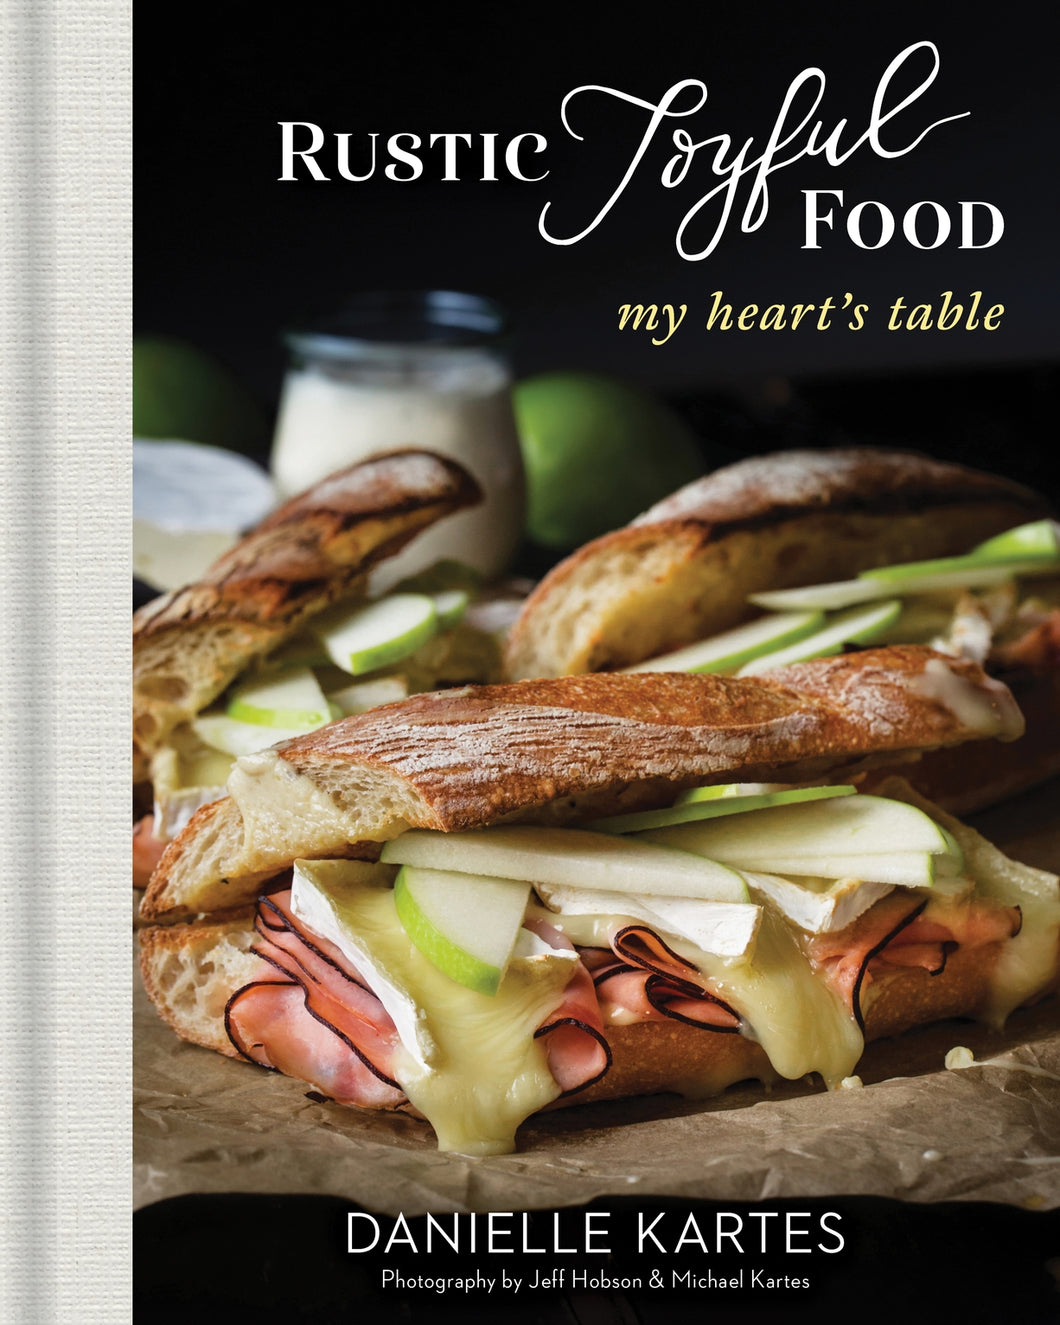 Rustic Joyful Food: My Heart's Table by Danielle Kartes